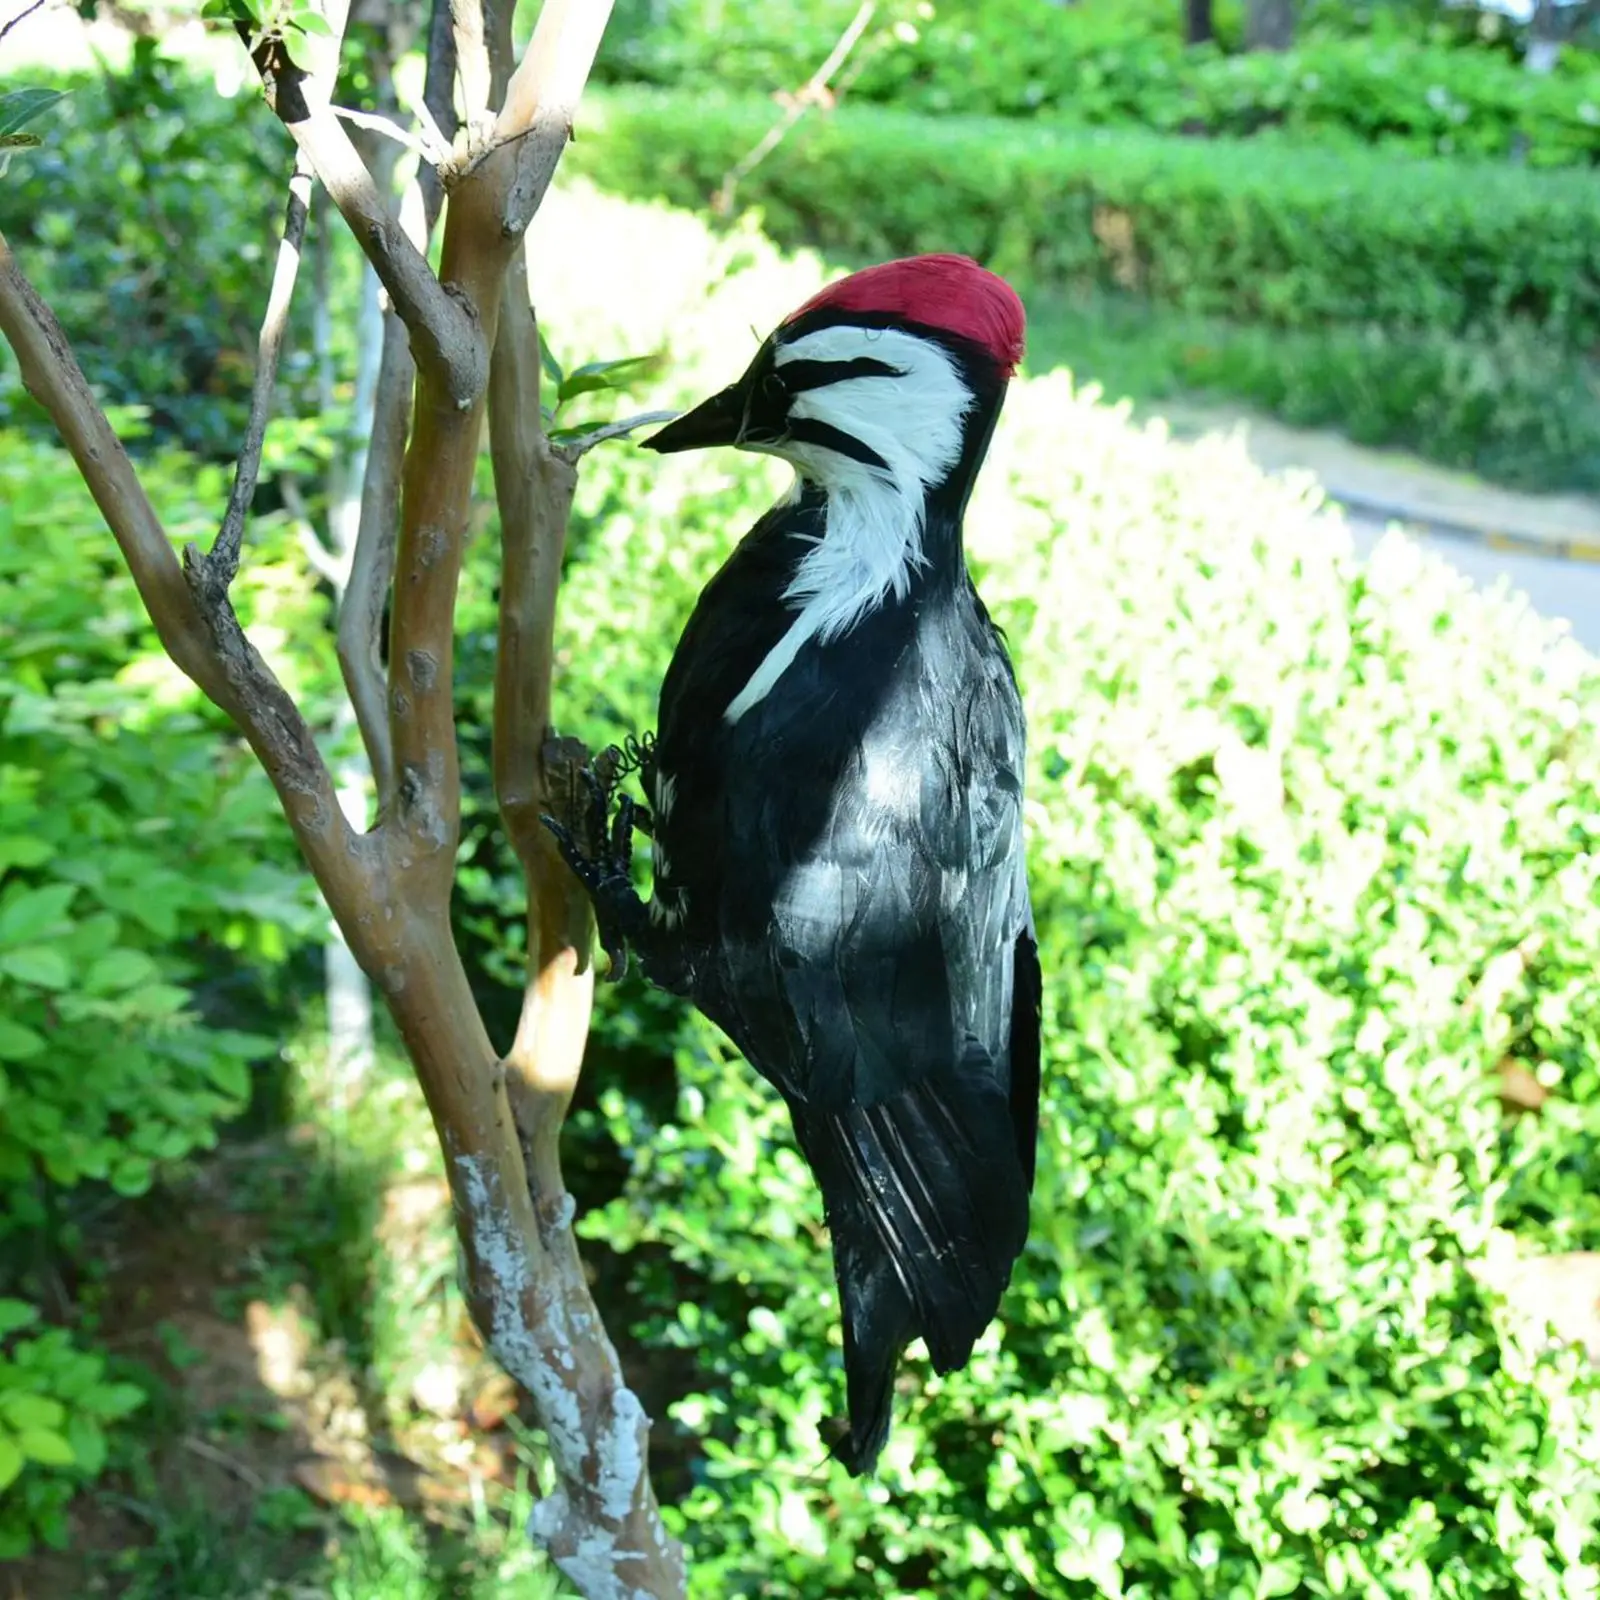 Simulatie Woodpecker Toys Bird Spring Feather Artificial Gift Art Sculpture Standbeeld Model voor tuinwerf Home Decor ornament